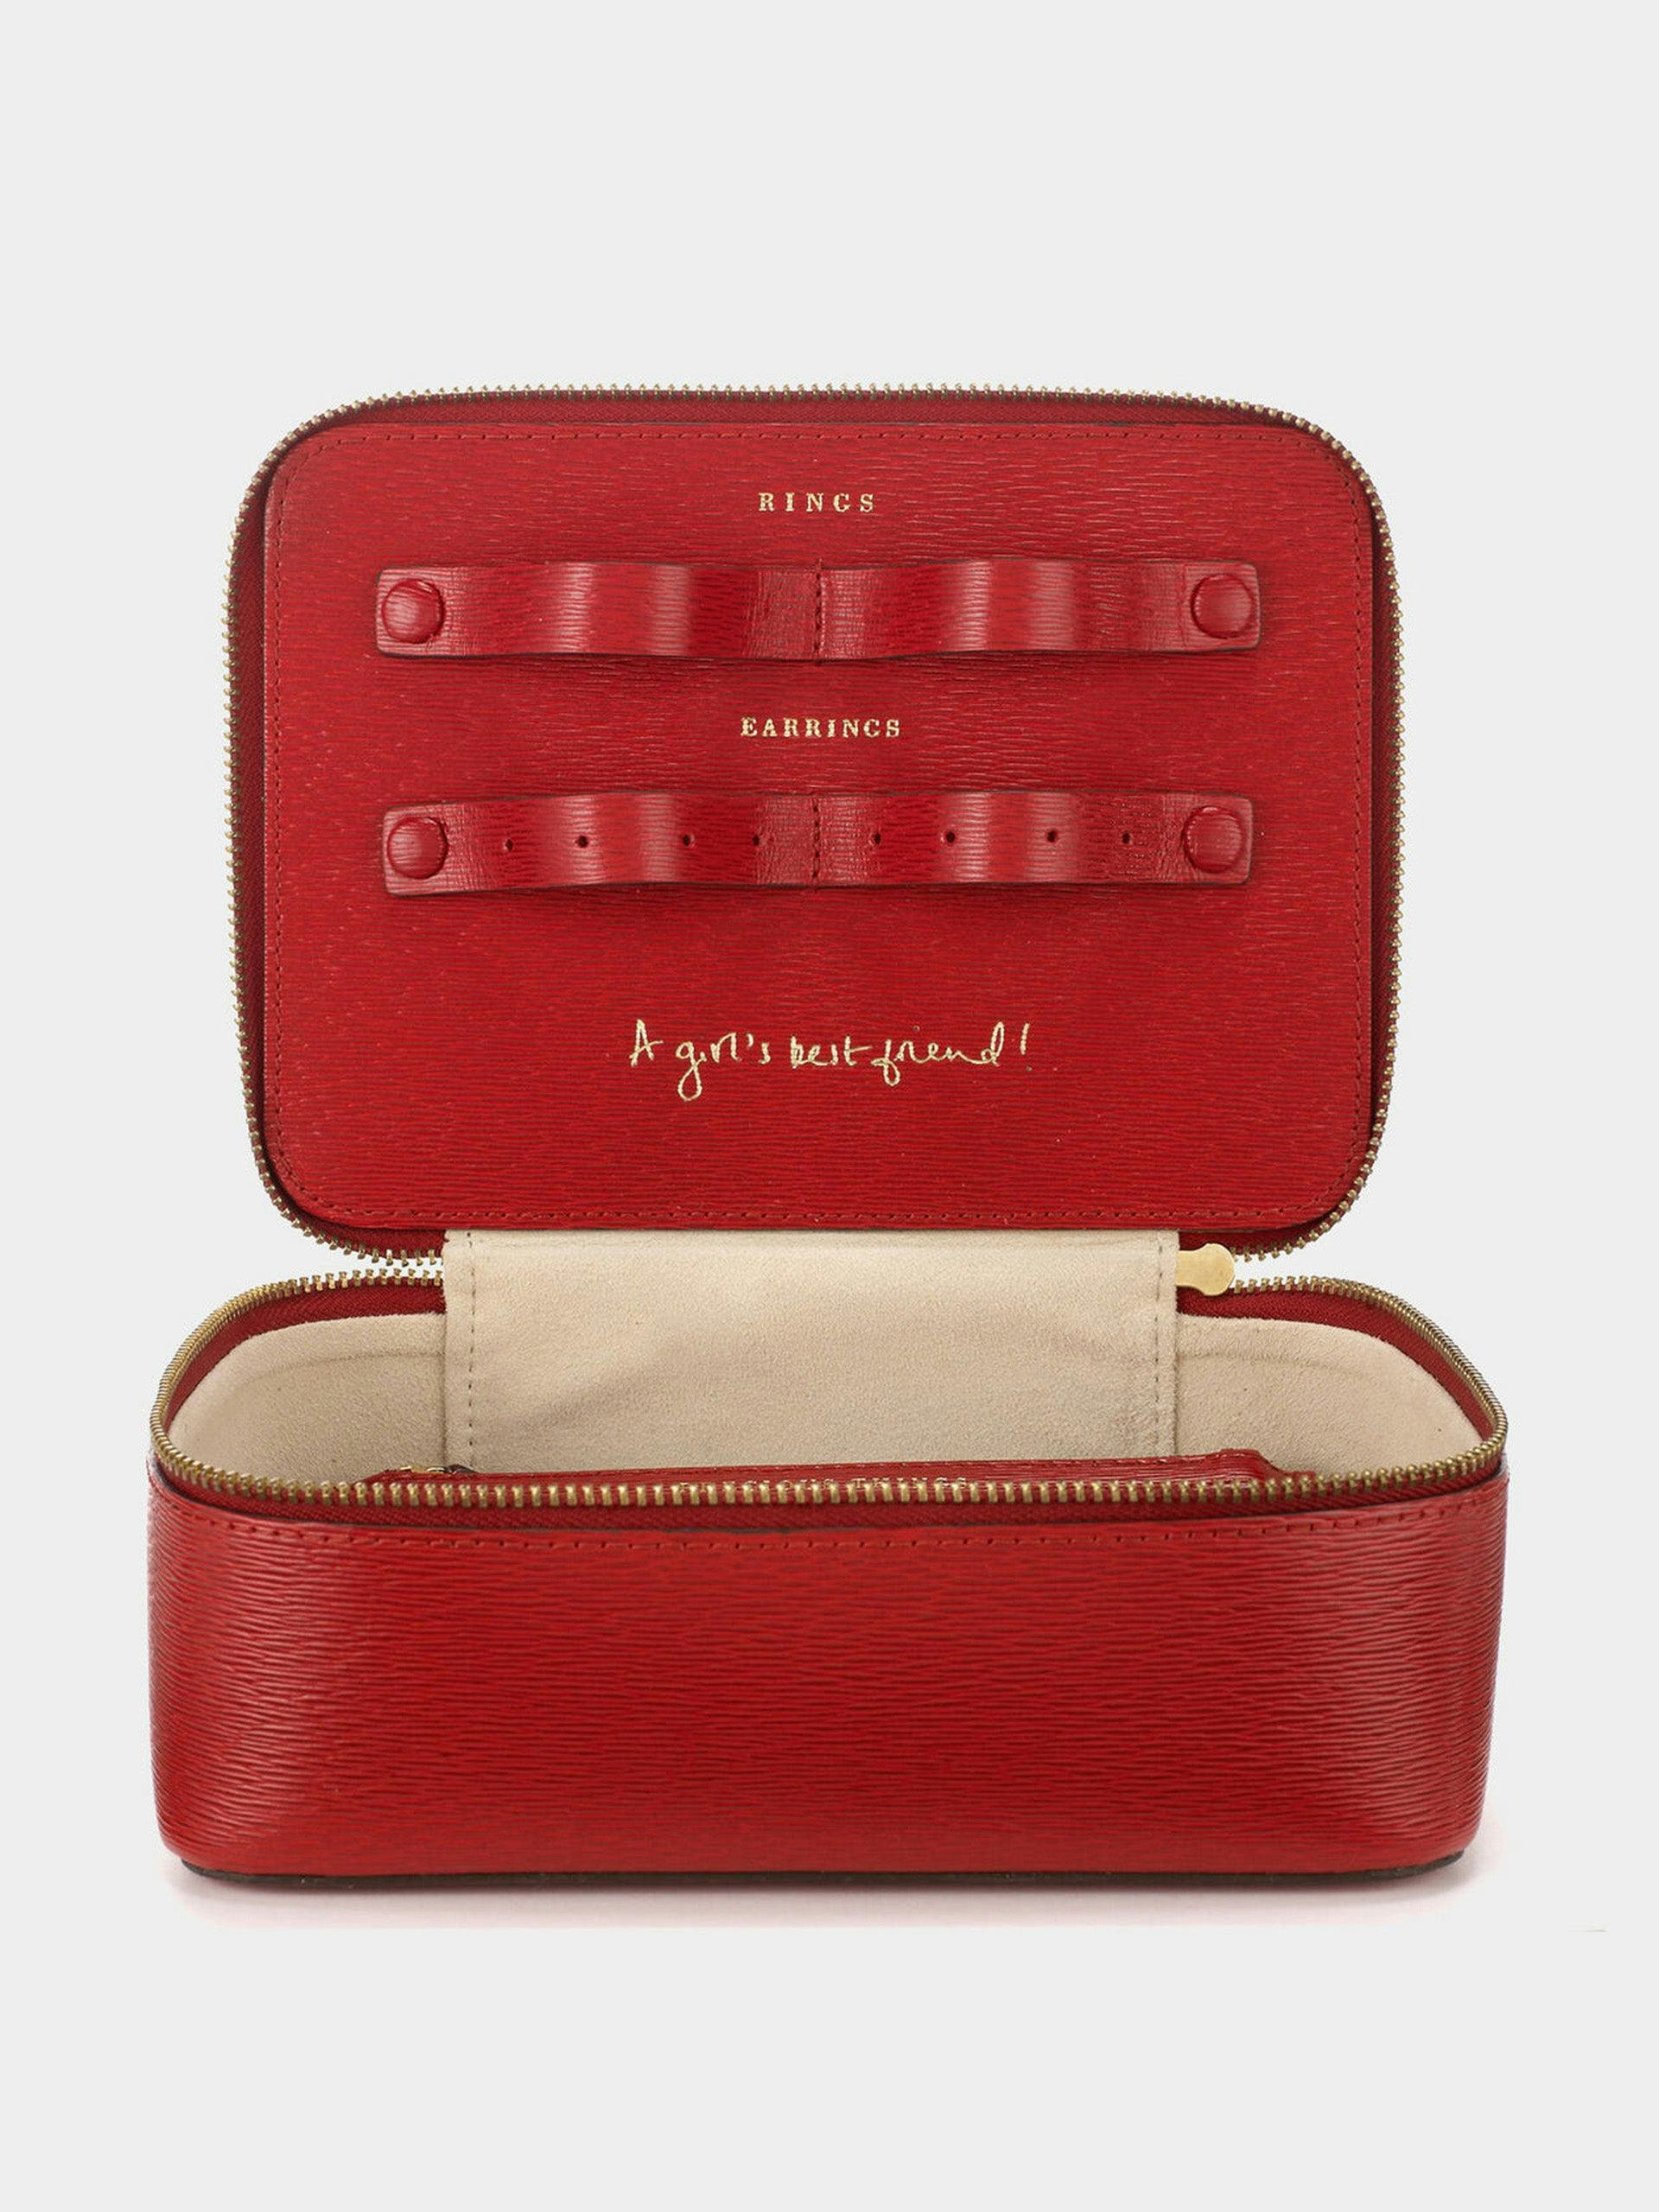 Red bespoke travelling jewellery case